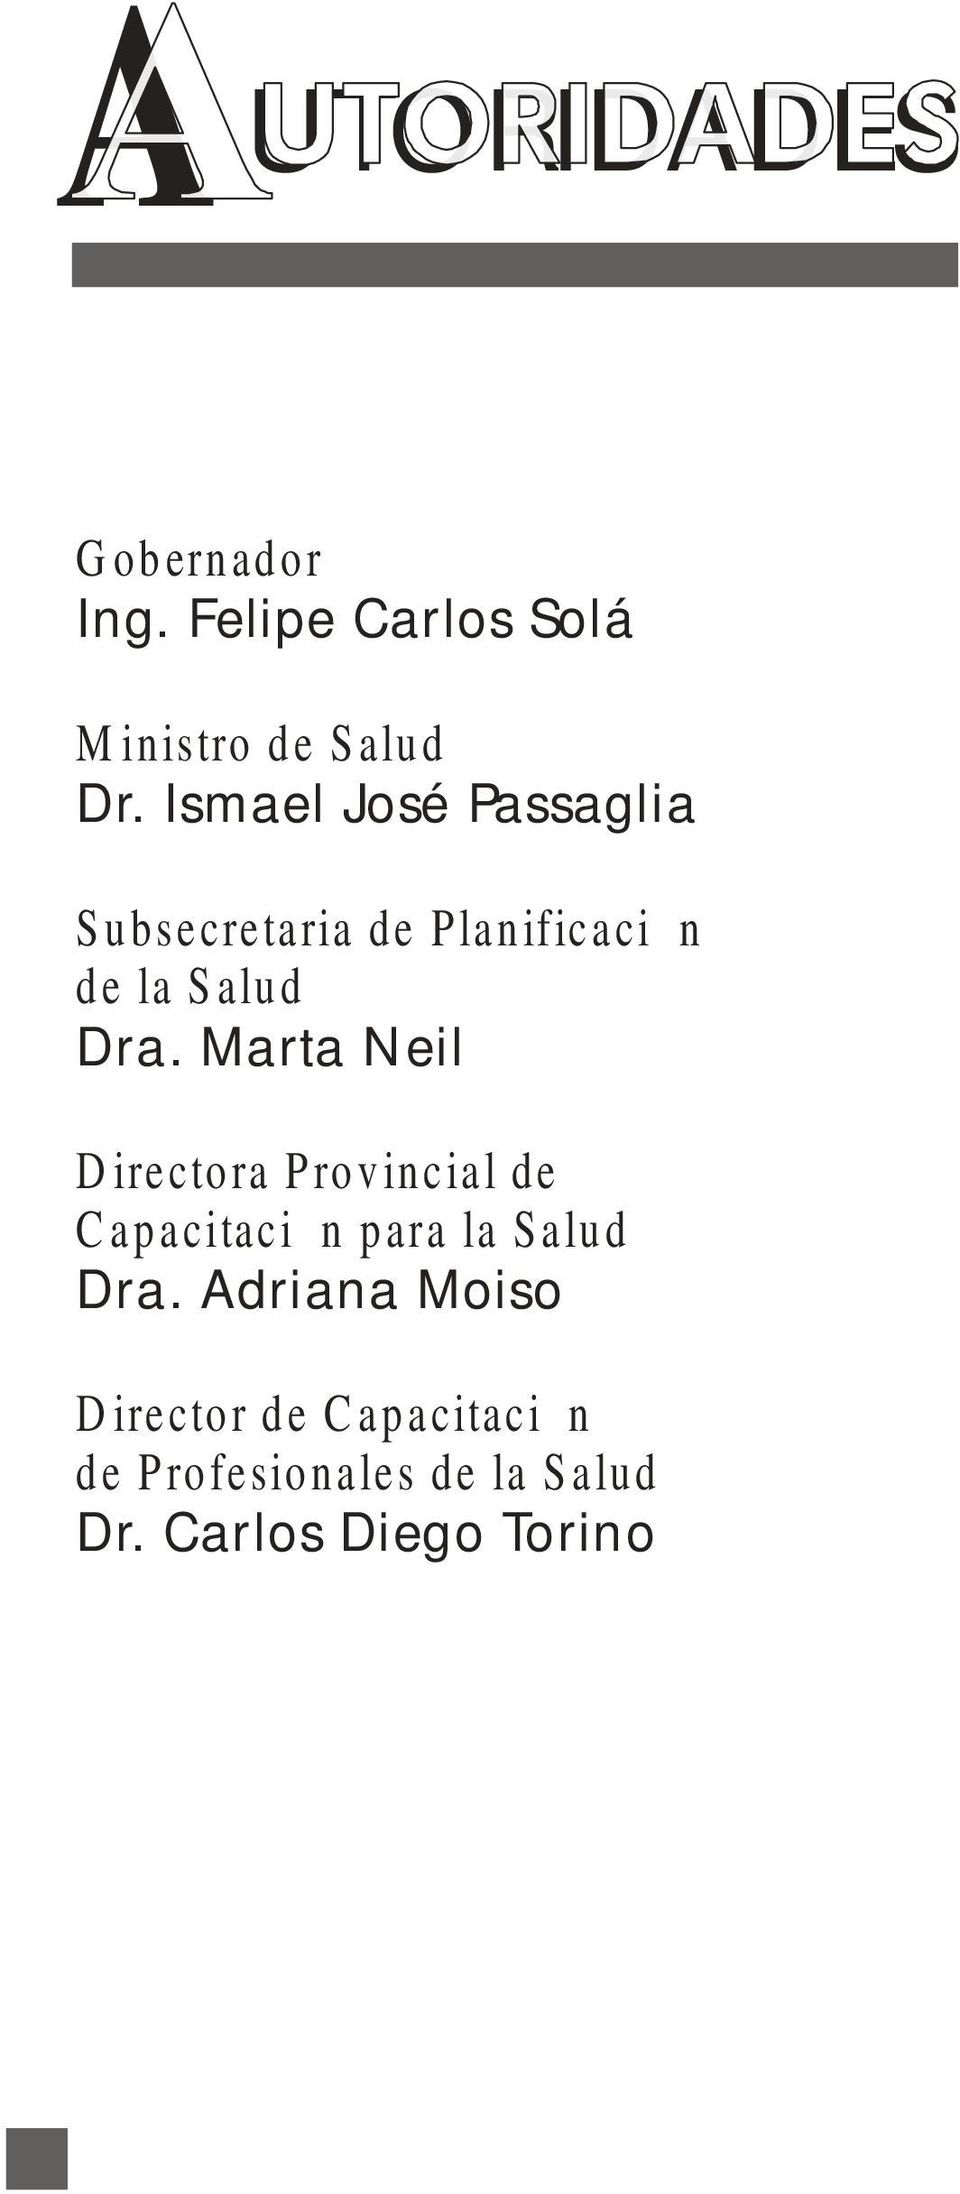 Marta Neil Directora Provincial de Capacitaci n para la Salud Dra.